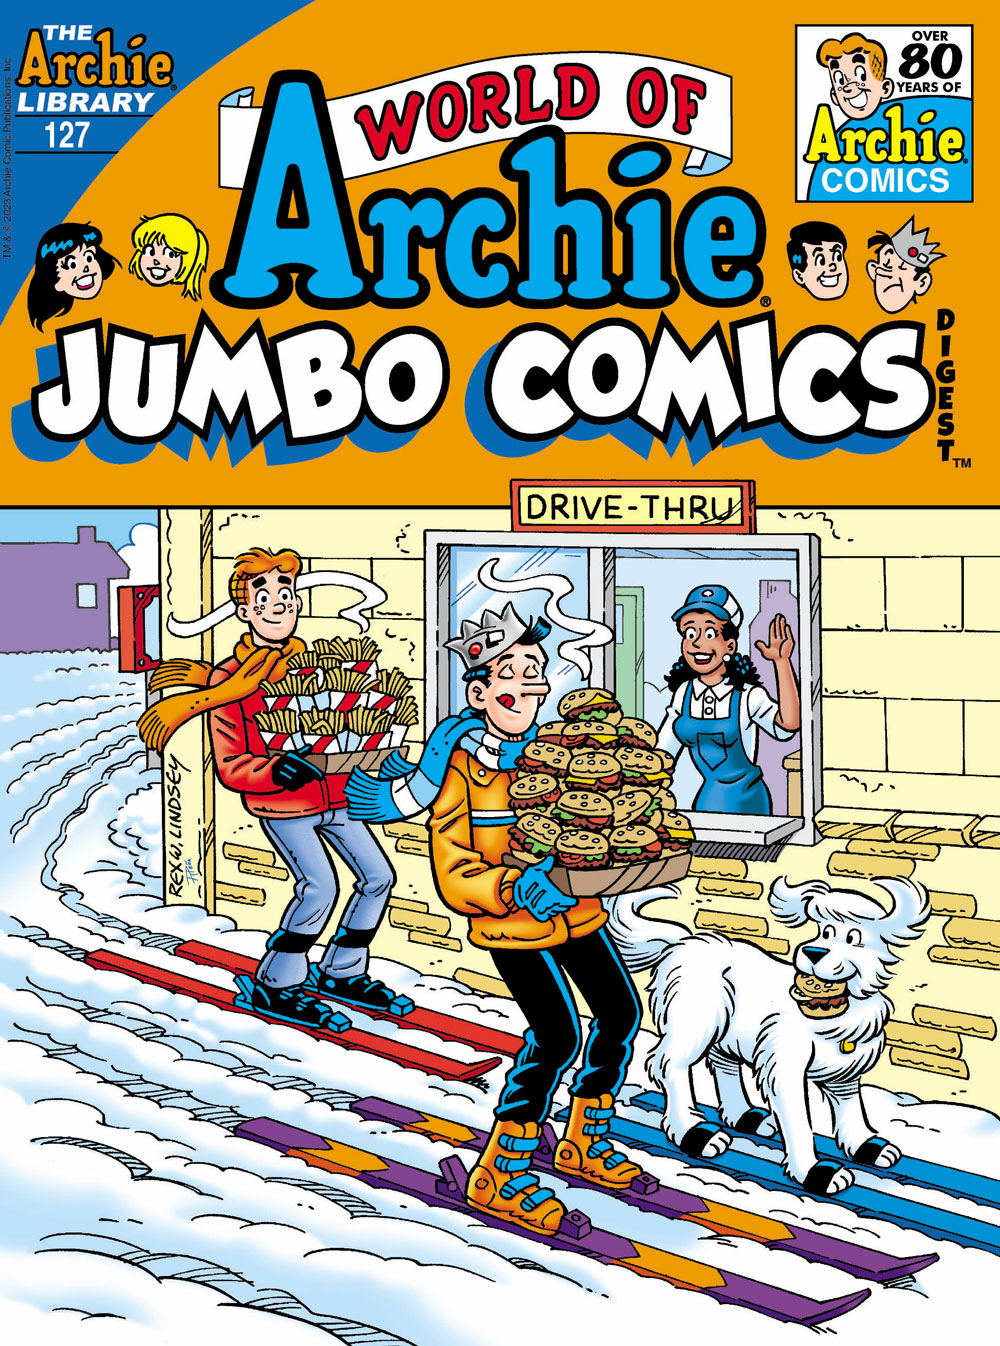 New Archie Comics Releases for 6/21/23 - Archie Comics